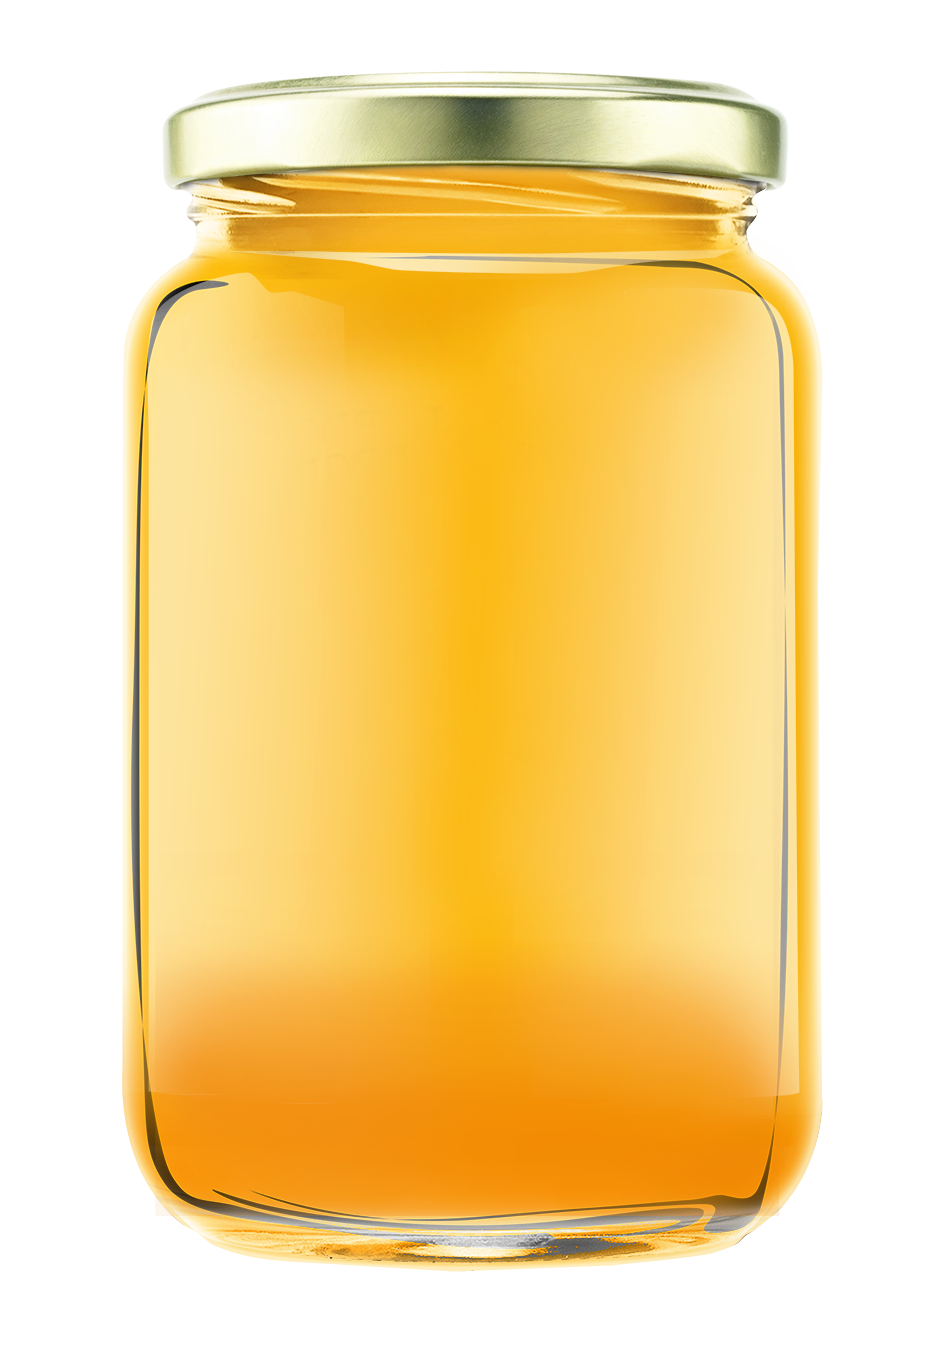 Honey Jar Png Image Purepng Free Transparent Cc0 Png Image Library